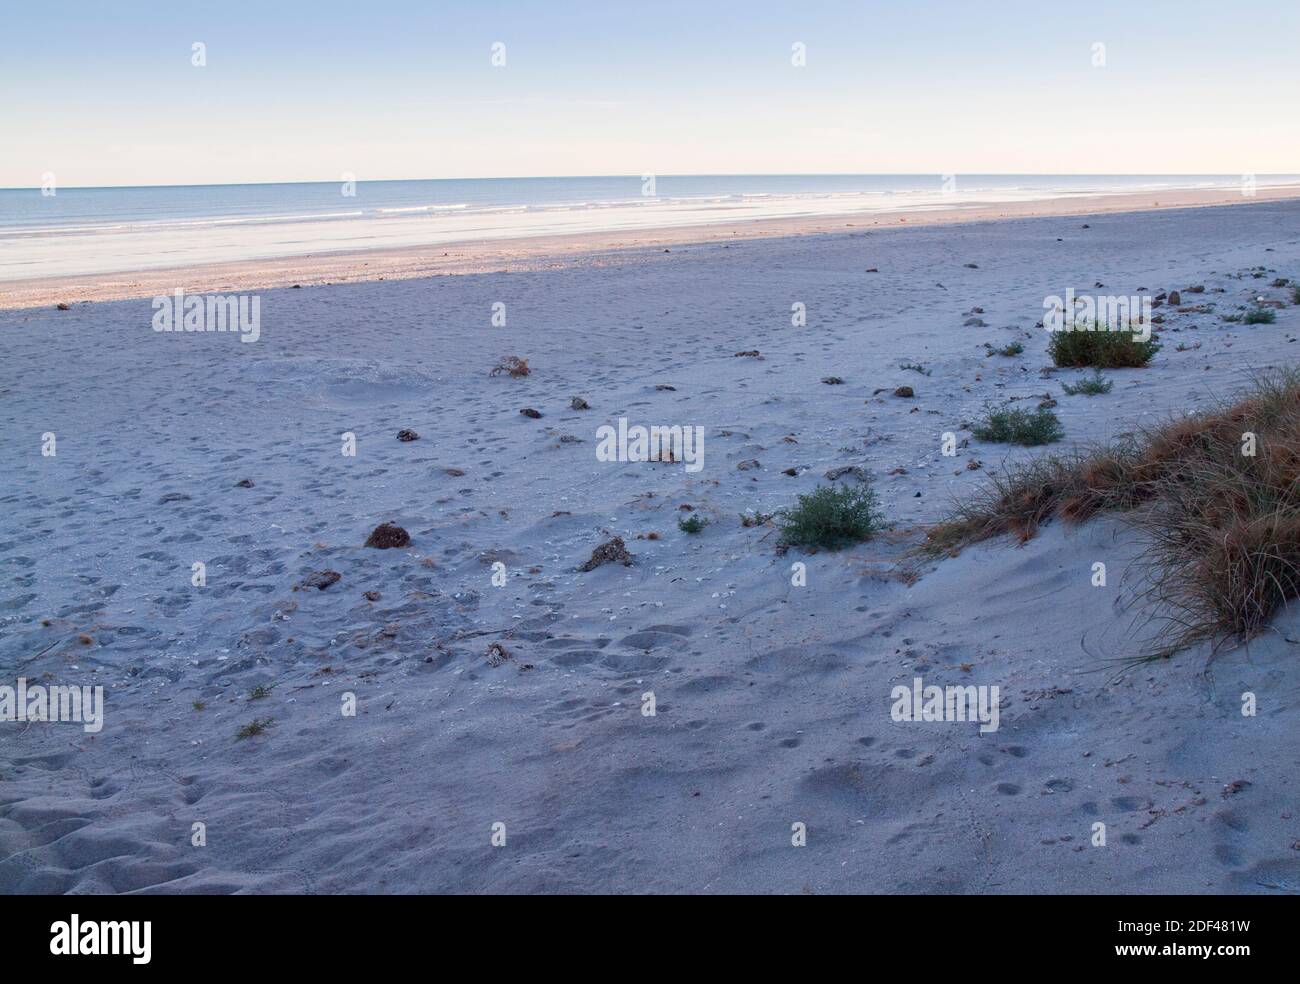 80 Mile Beach  on the edge of the Great Sandy Desert snd the Indian Ocean, Western Australia. Stock Photo